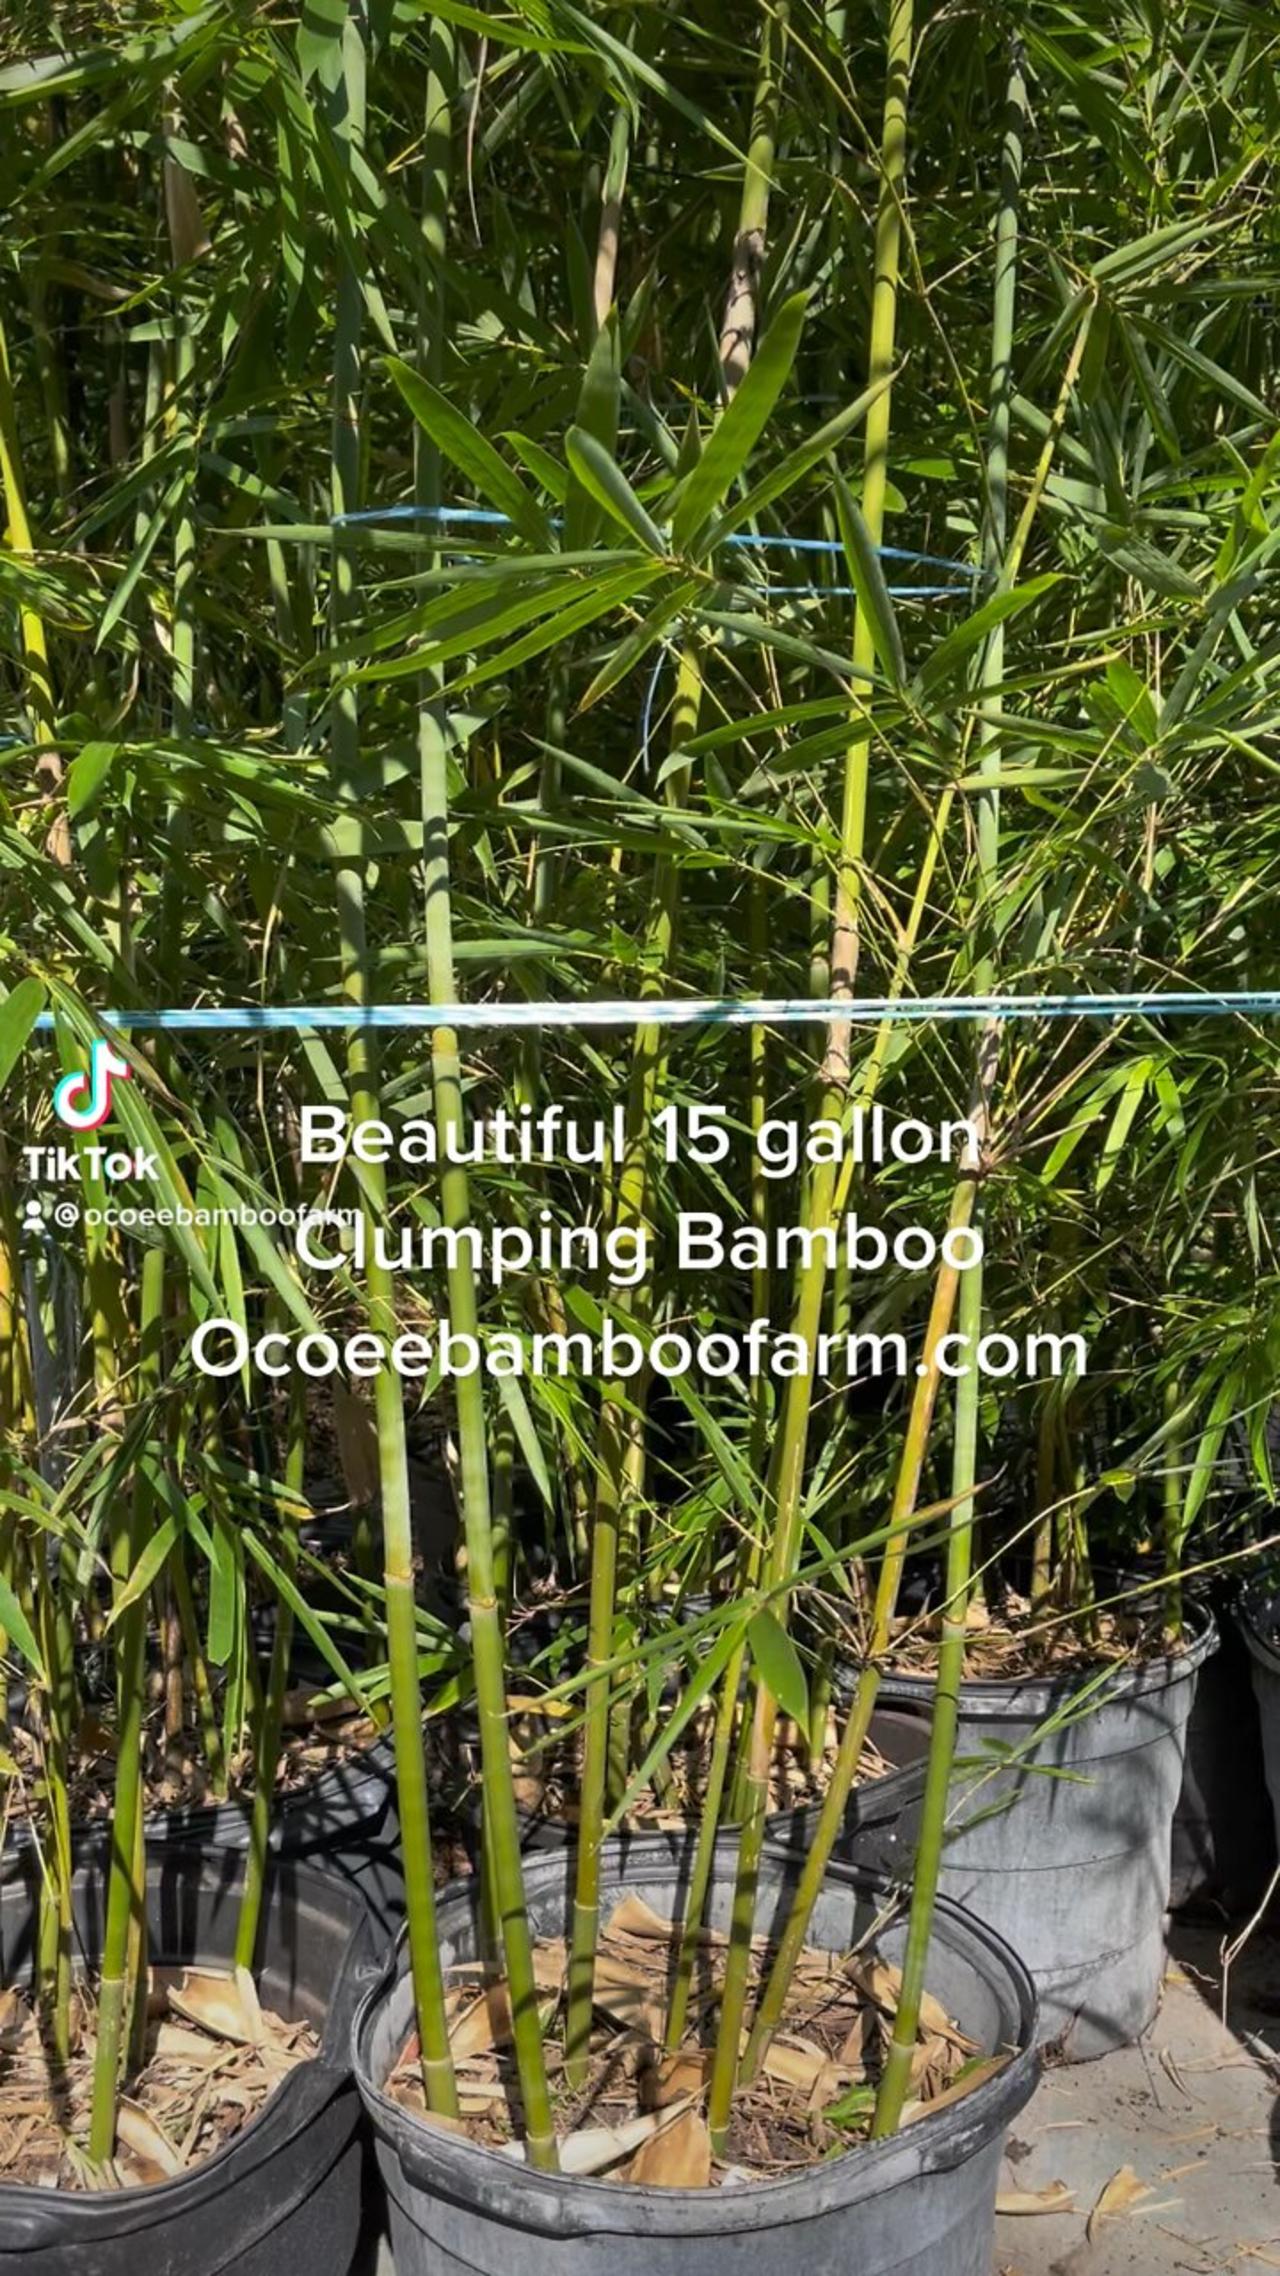 Beautiful 15 gallon Graceful Bamboo Ocoee Bamboo Farm 407-777-4807